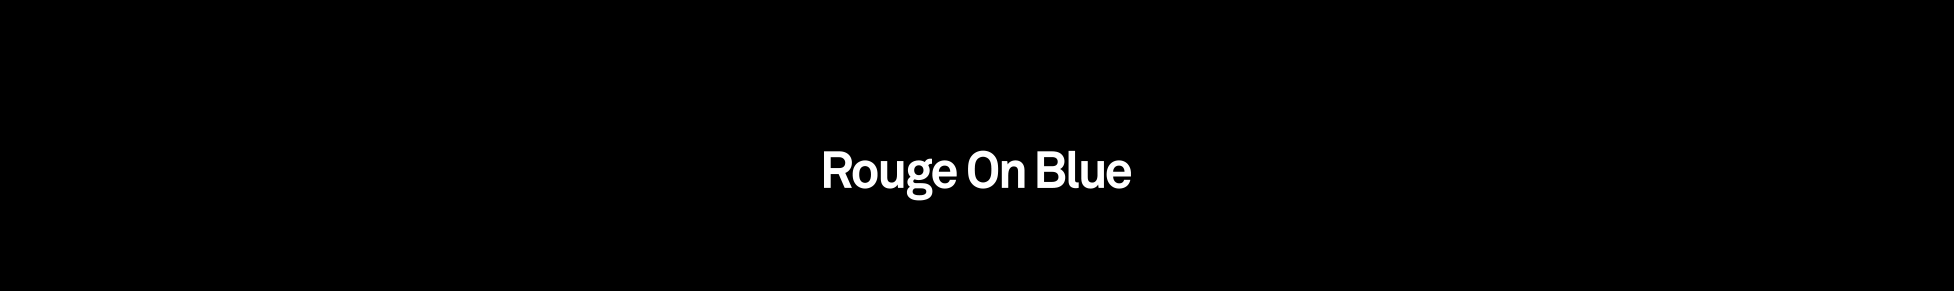 Rouge On Blue .com's profile banner